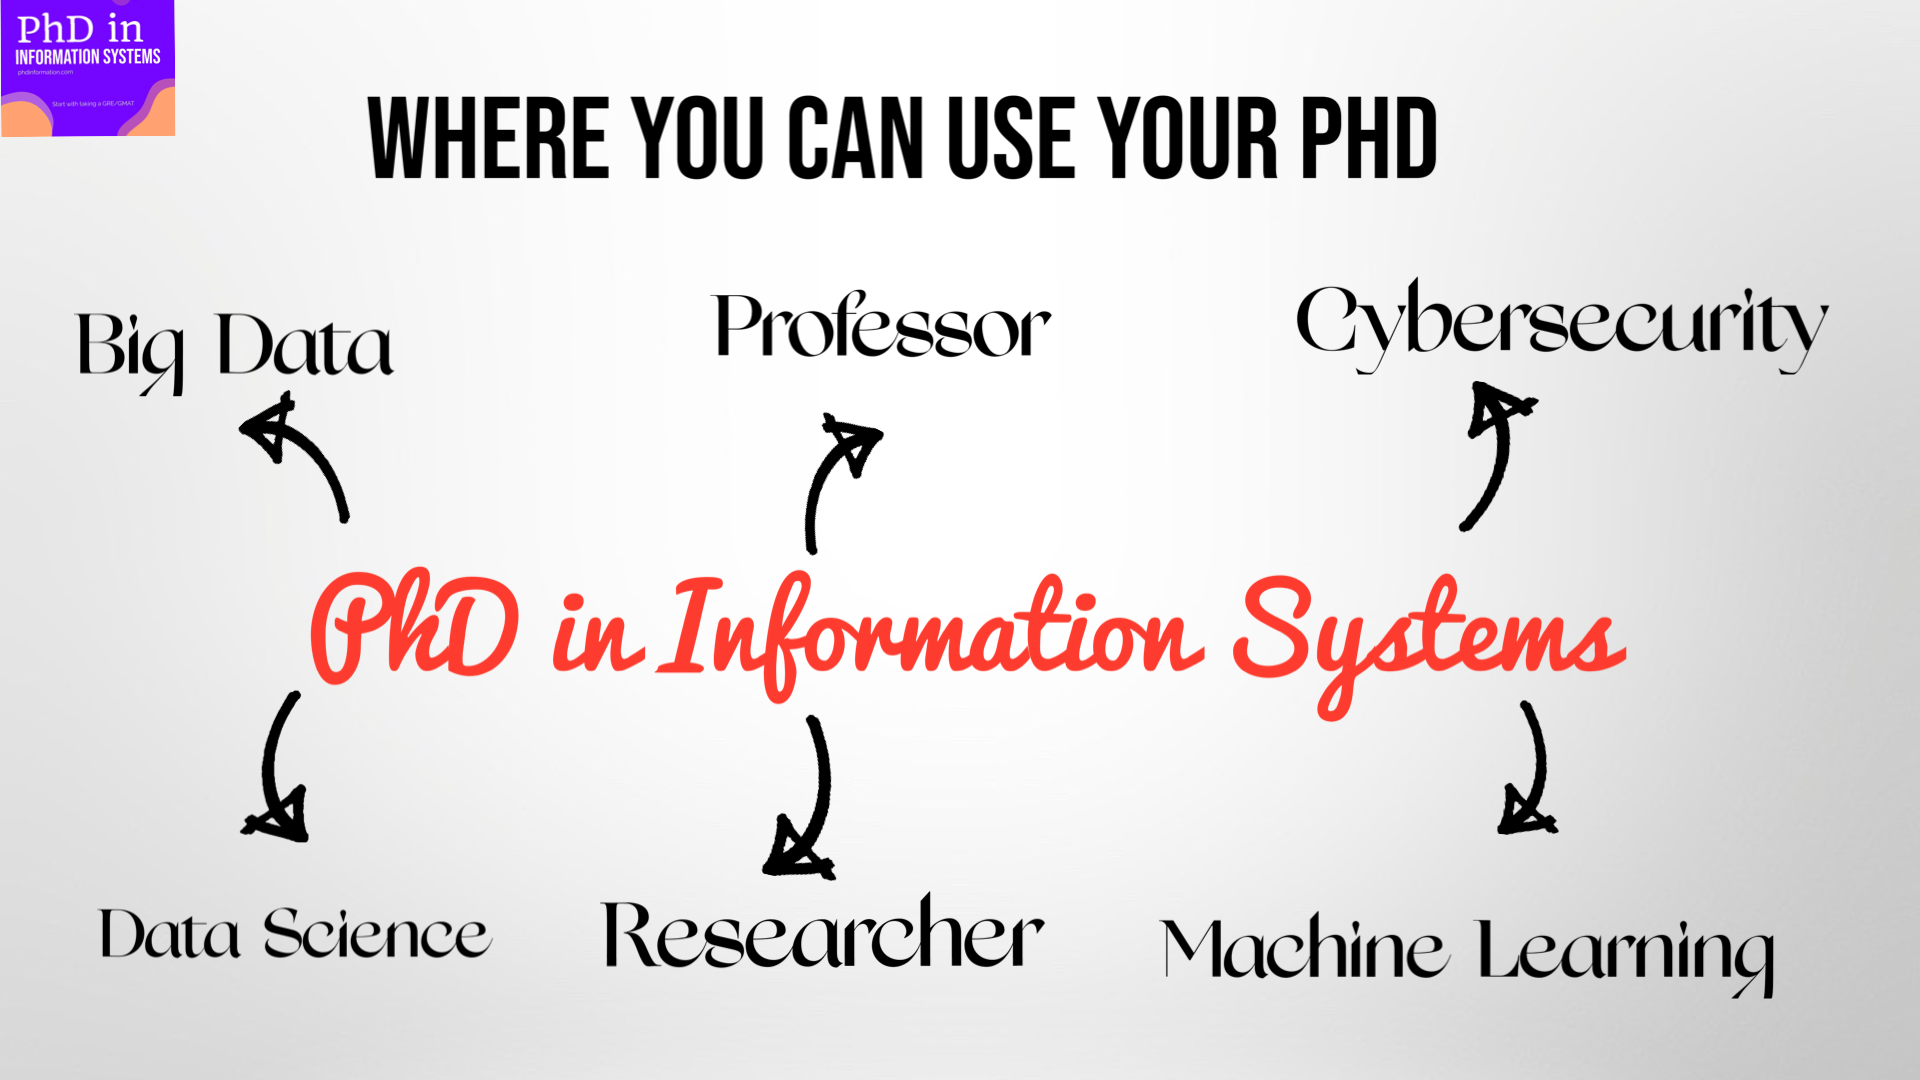 phd information system management